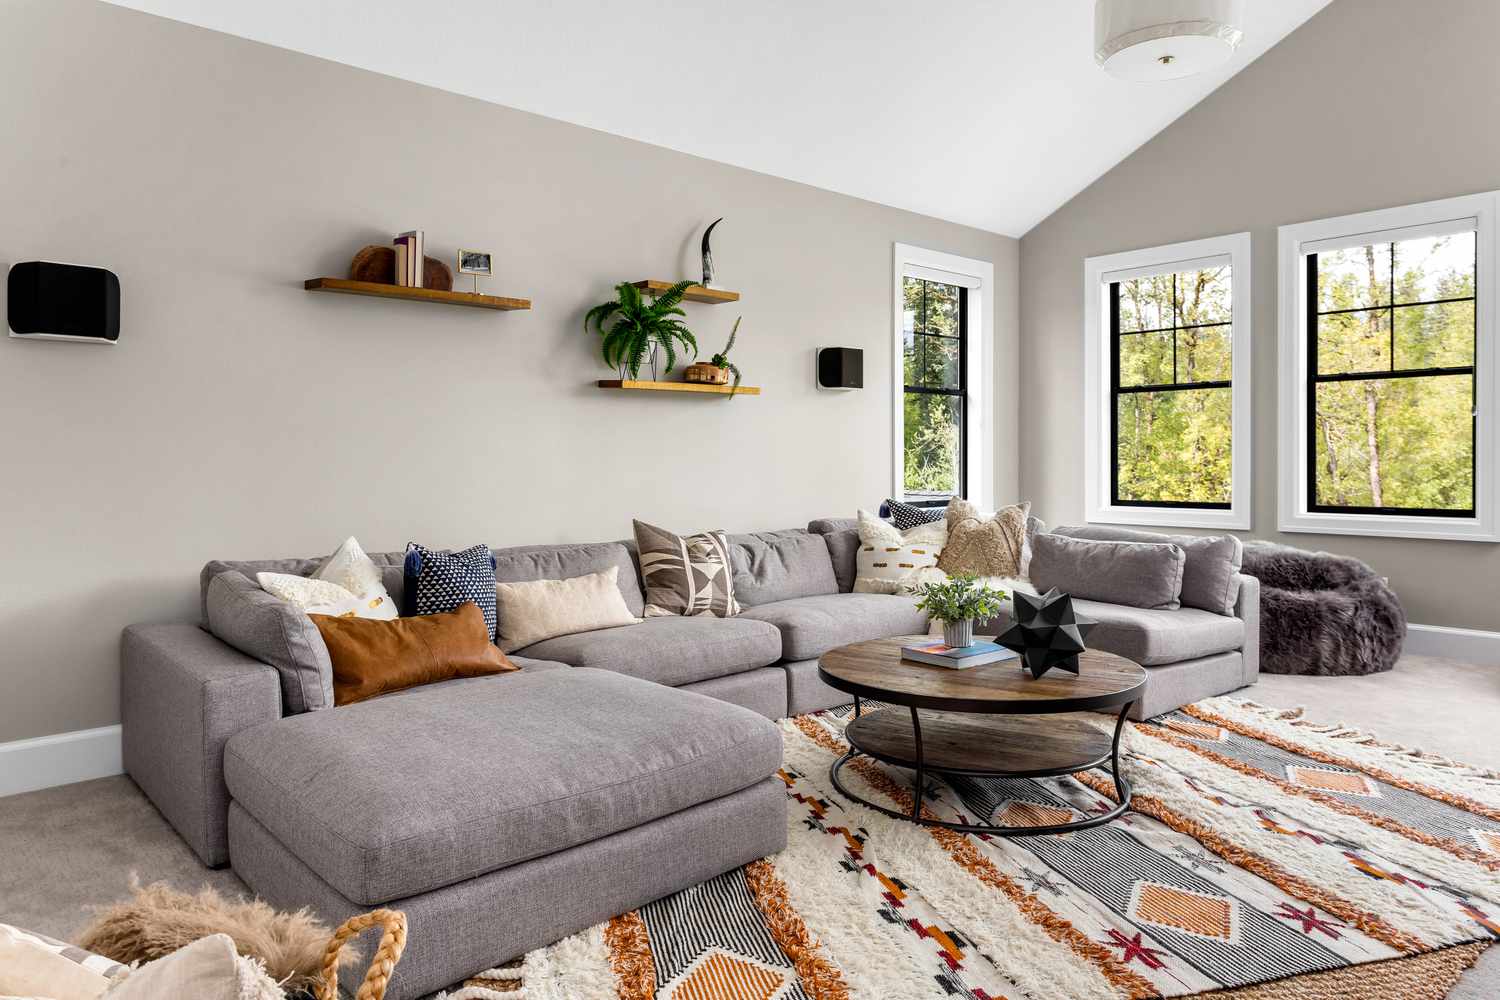 Belo interior de sala de estar com tapete colorido, sofá grande e luz natural abundante